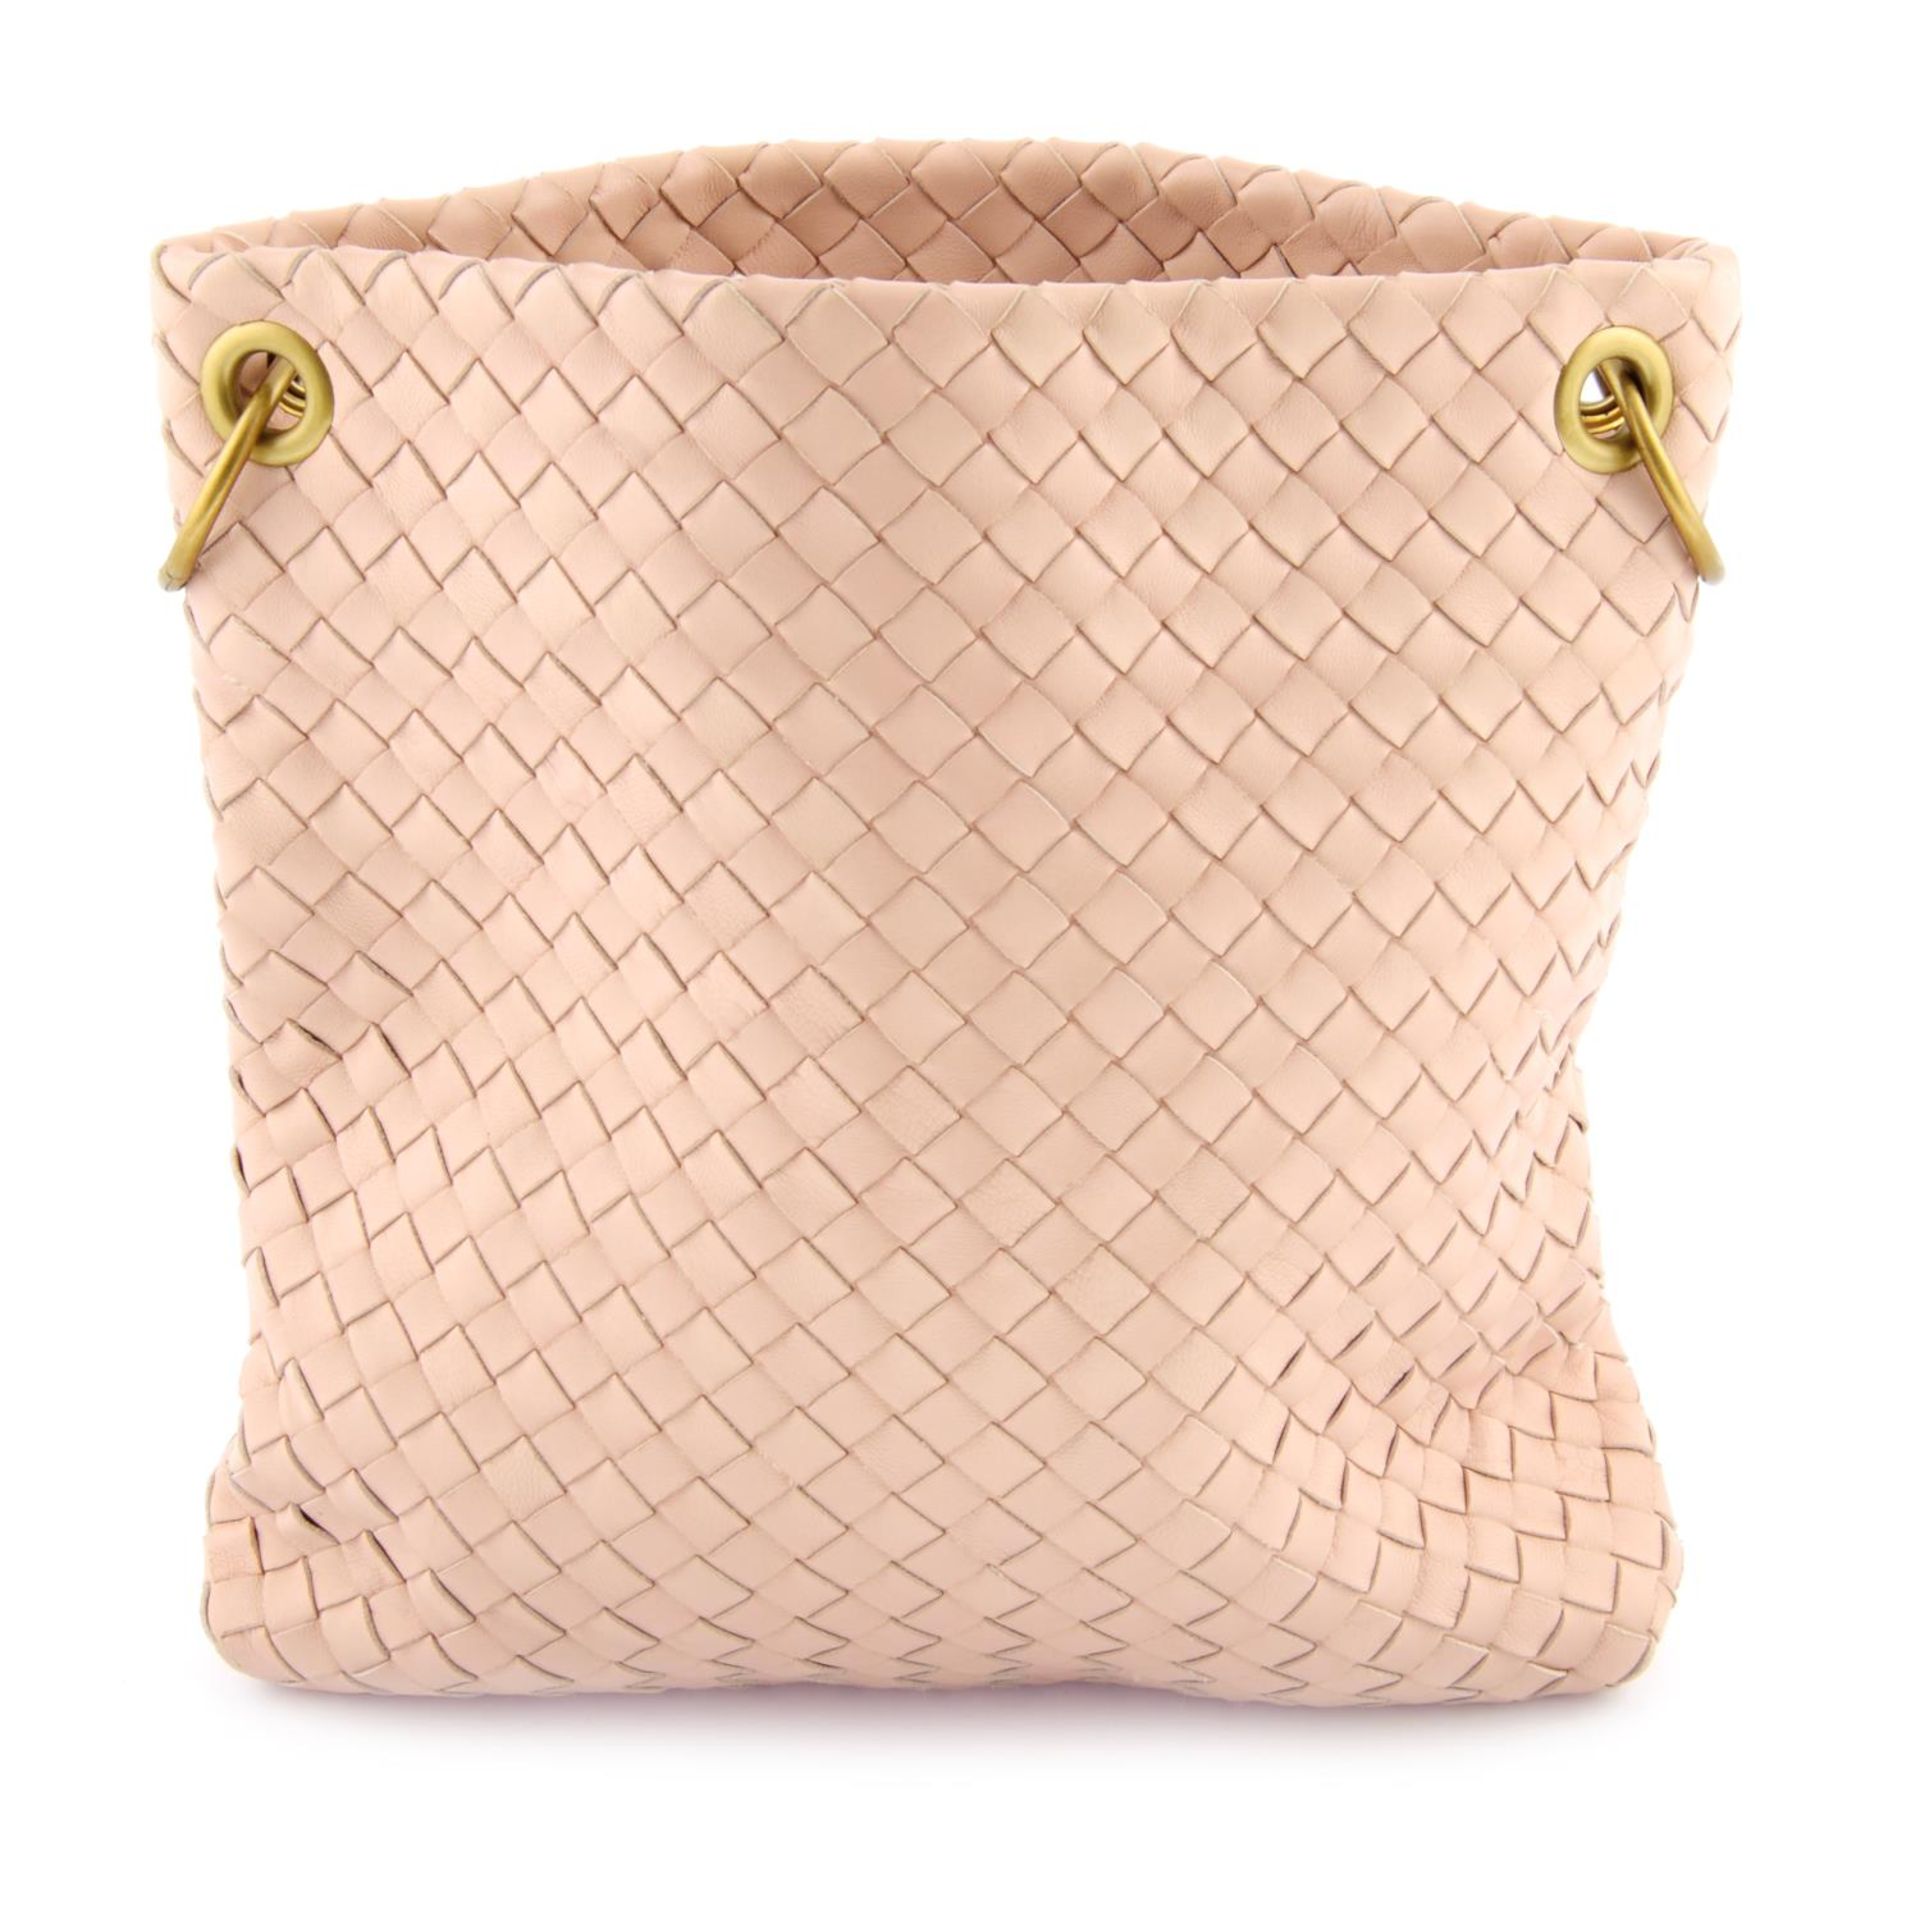 BOTTEGA VENETA - a blush pink Intrecciato crossbody handbag.